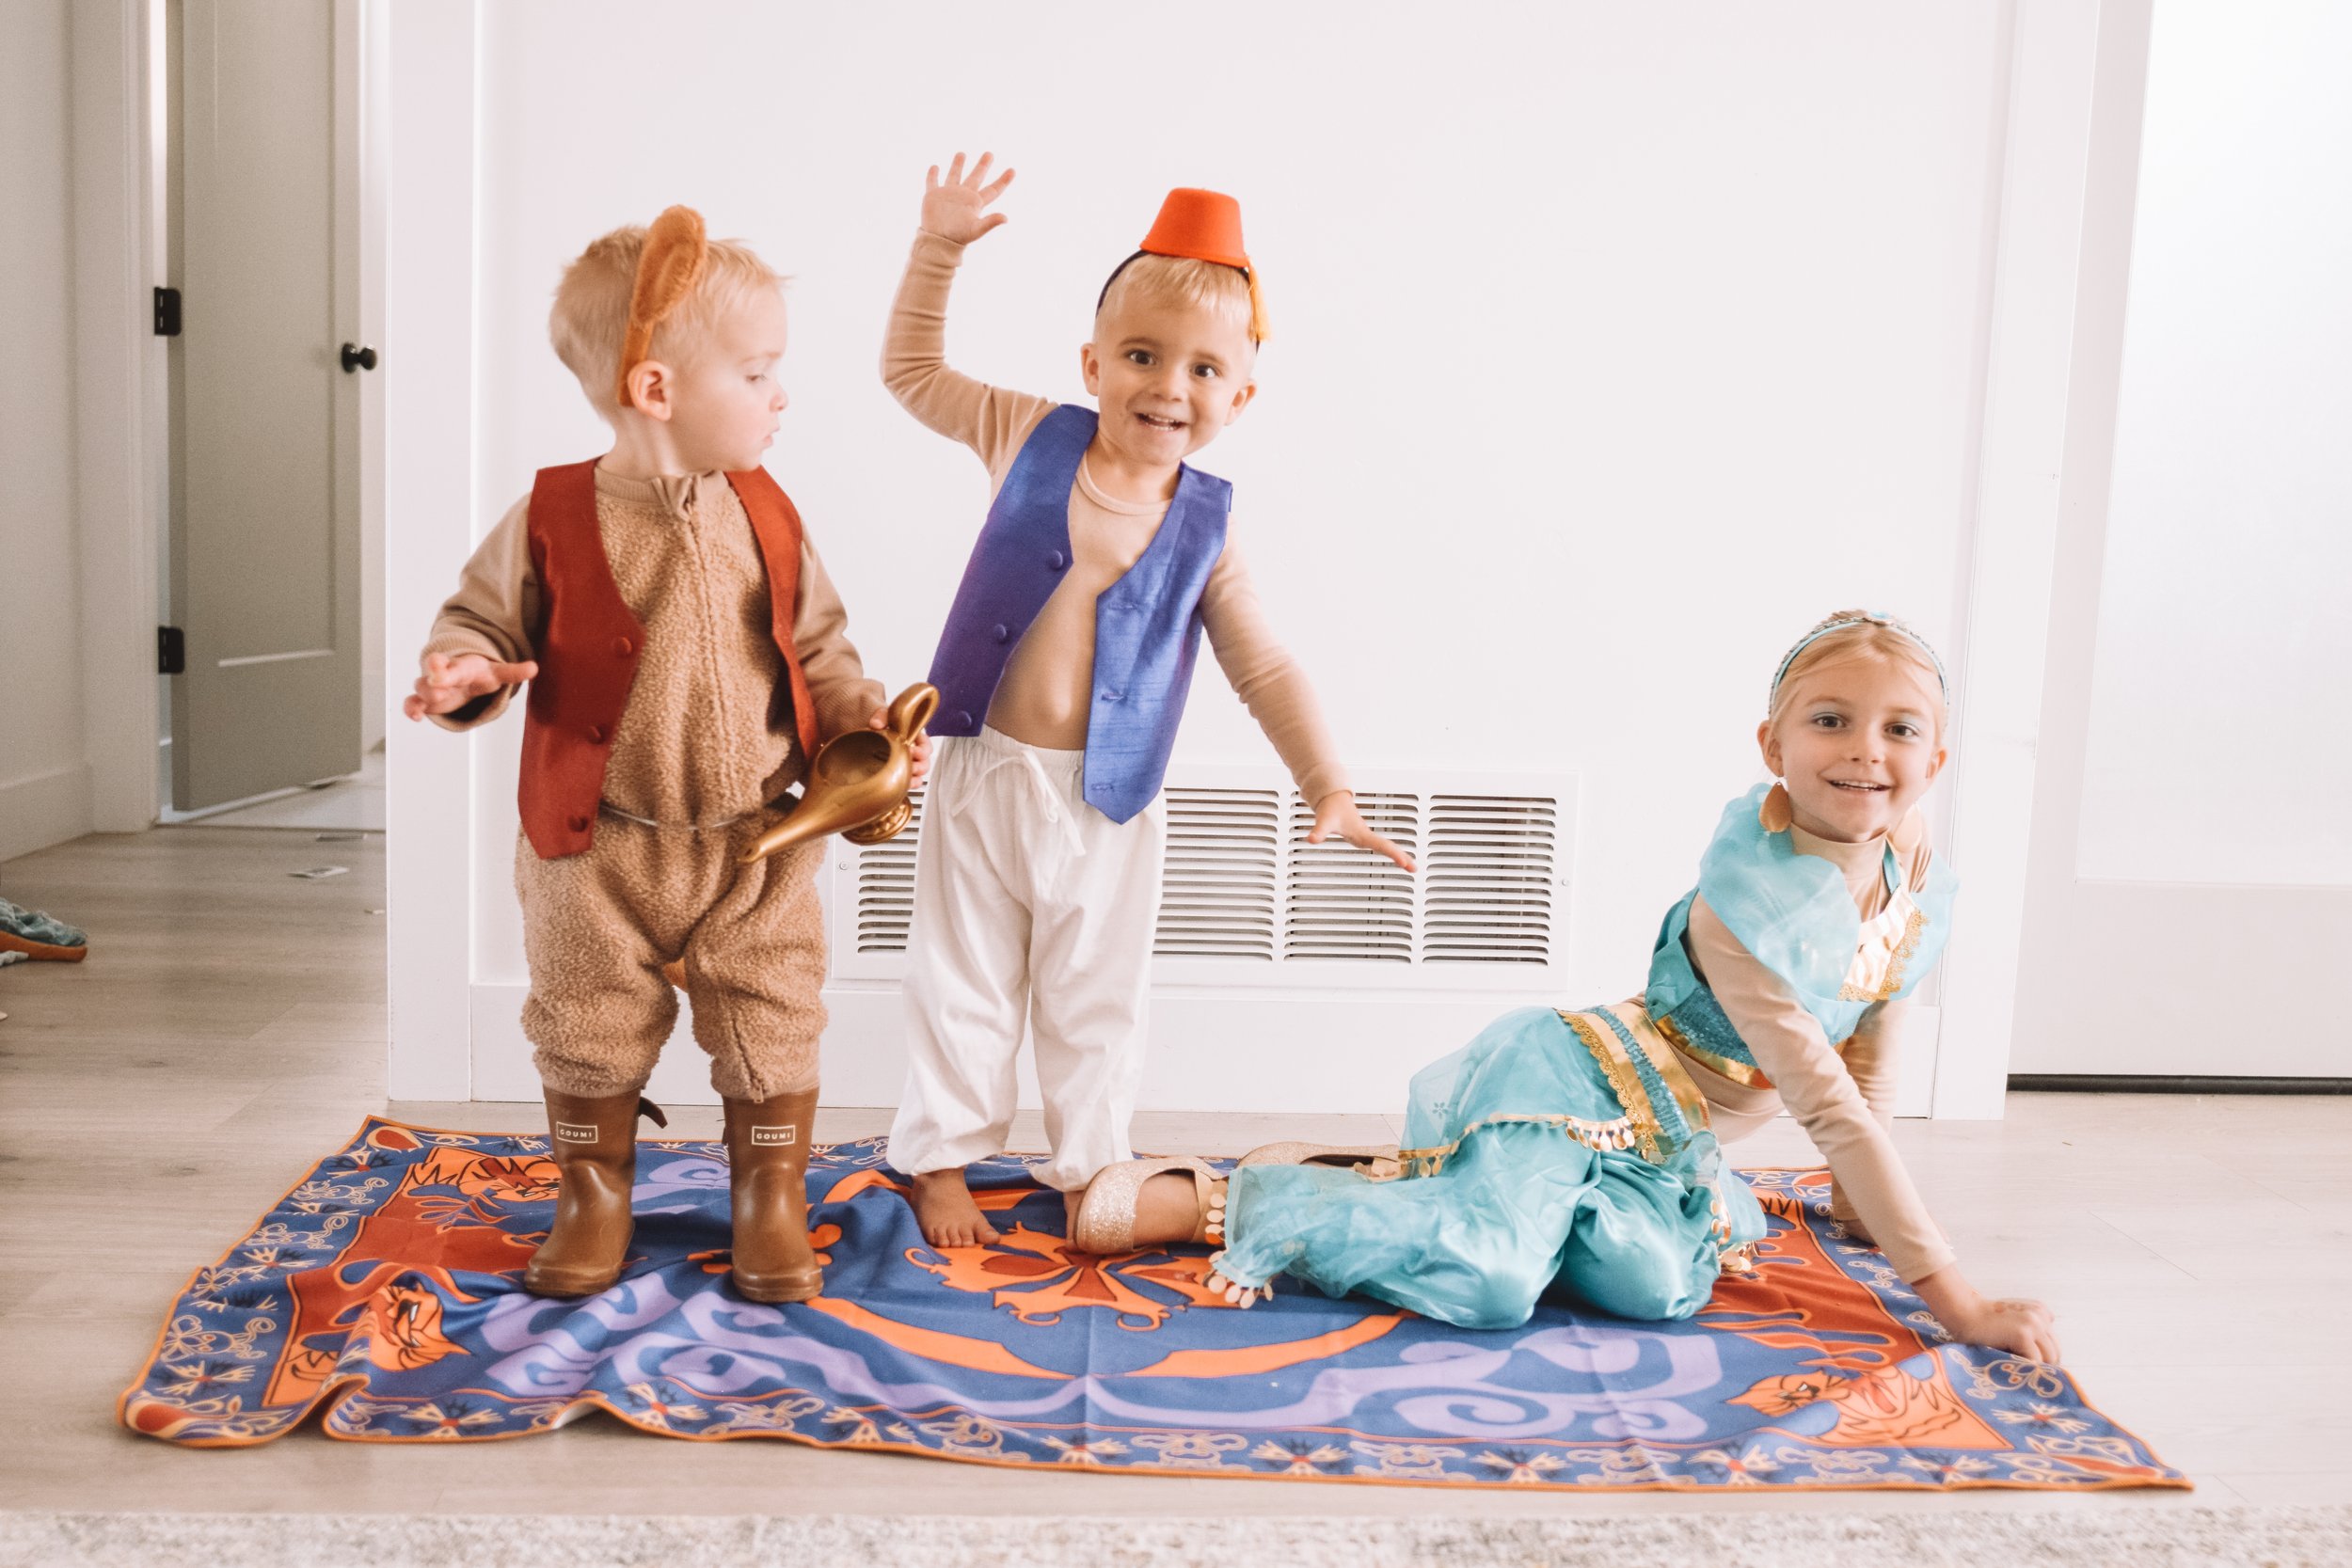 Family Halloween Costumes - Aladdin